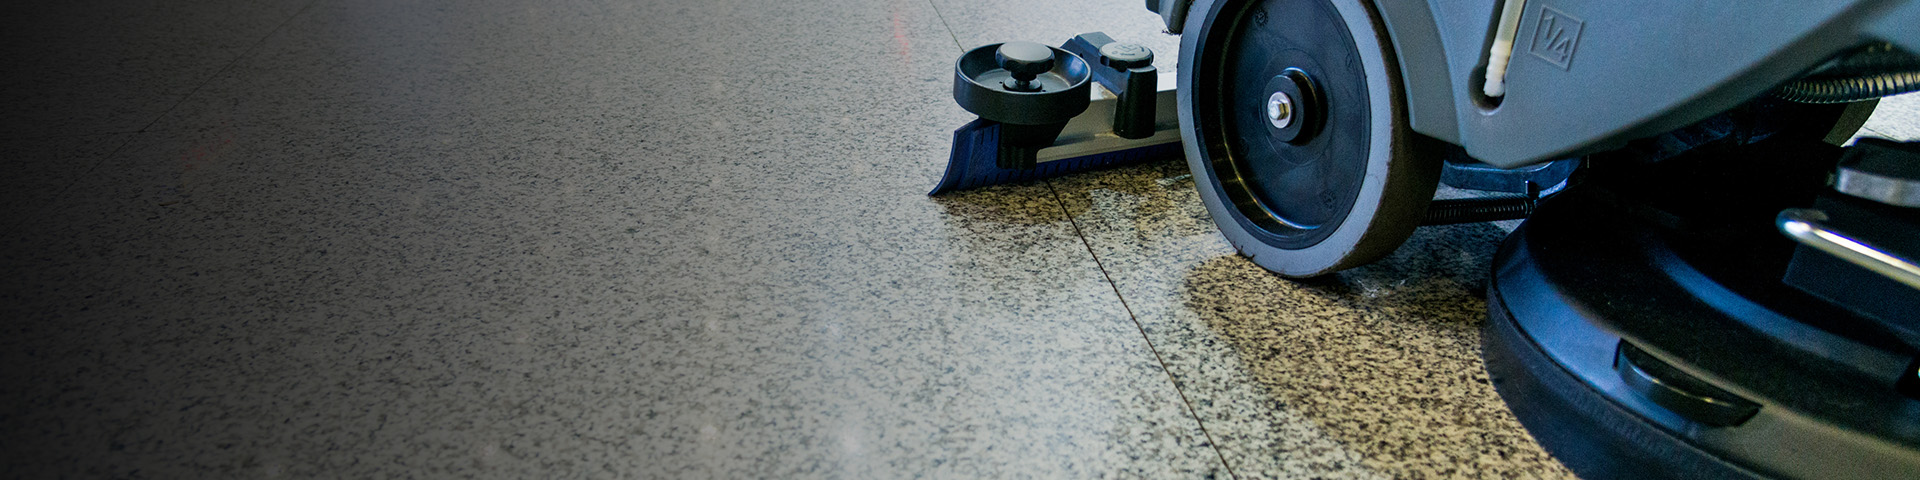 Floor scrubber in action cleaning and waxing floor